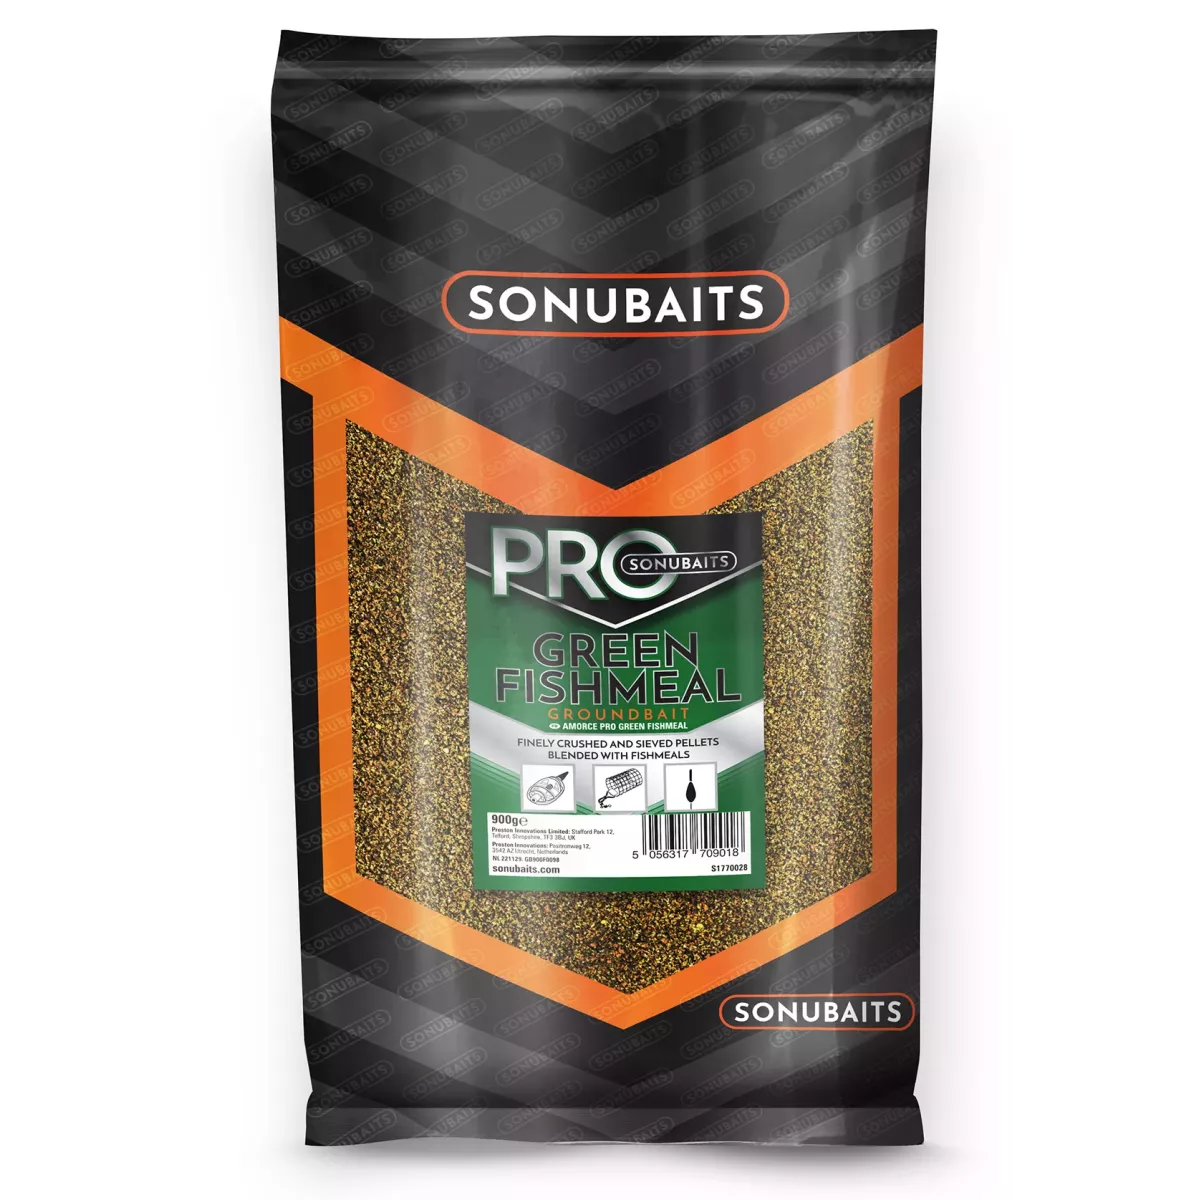 Zanęta Sonubaits Pro Groundbait 900g - Green Fishmeal